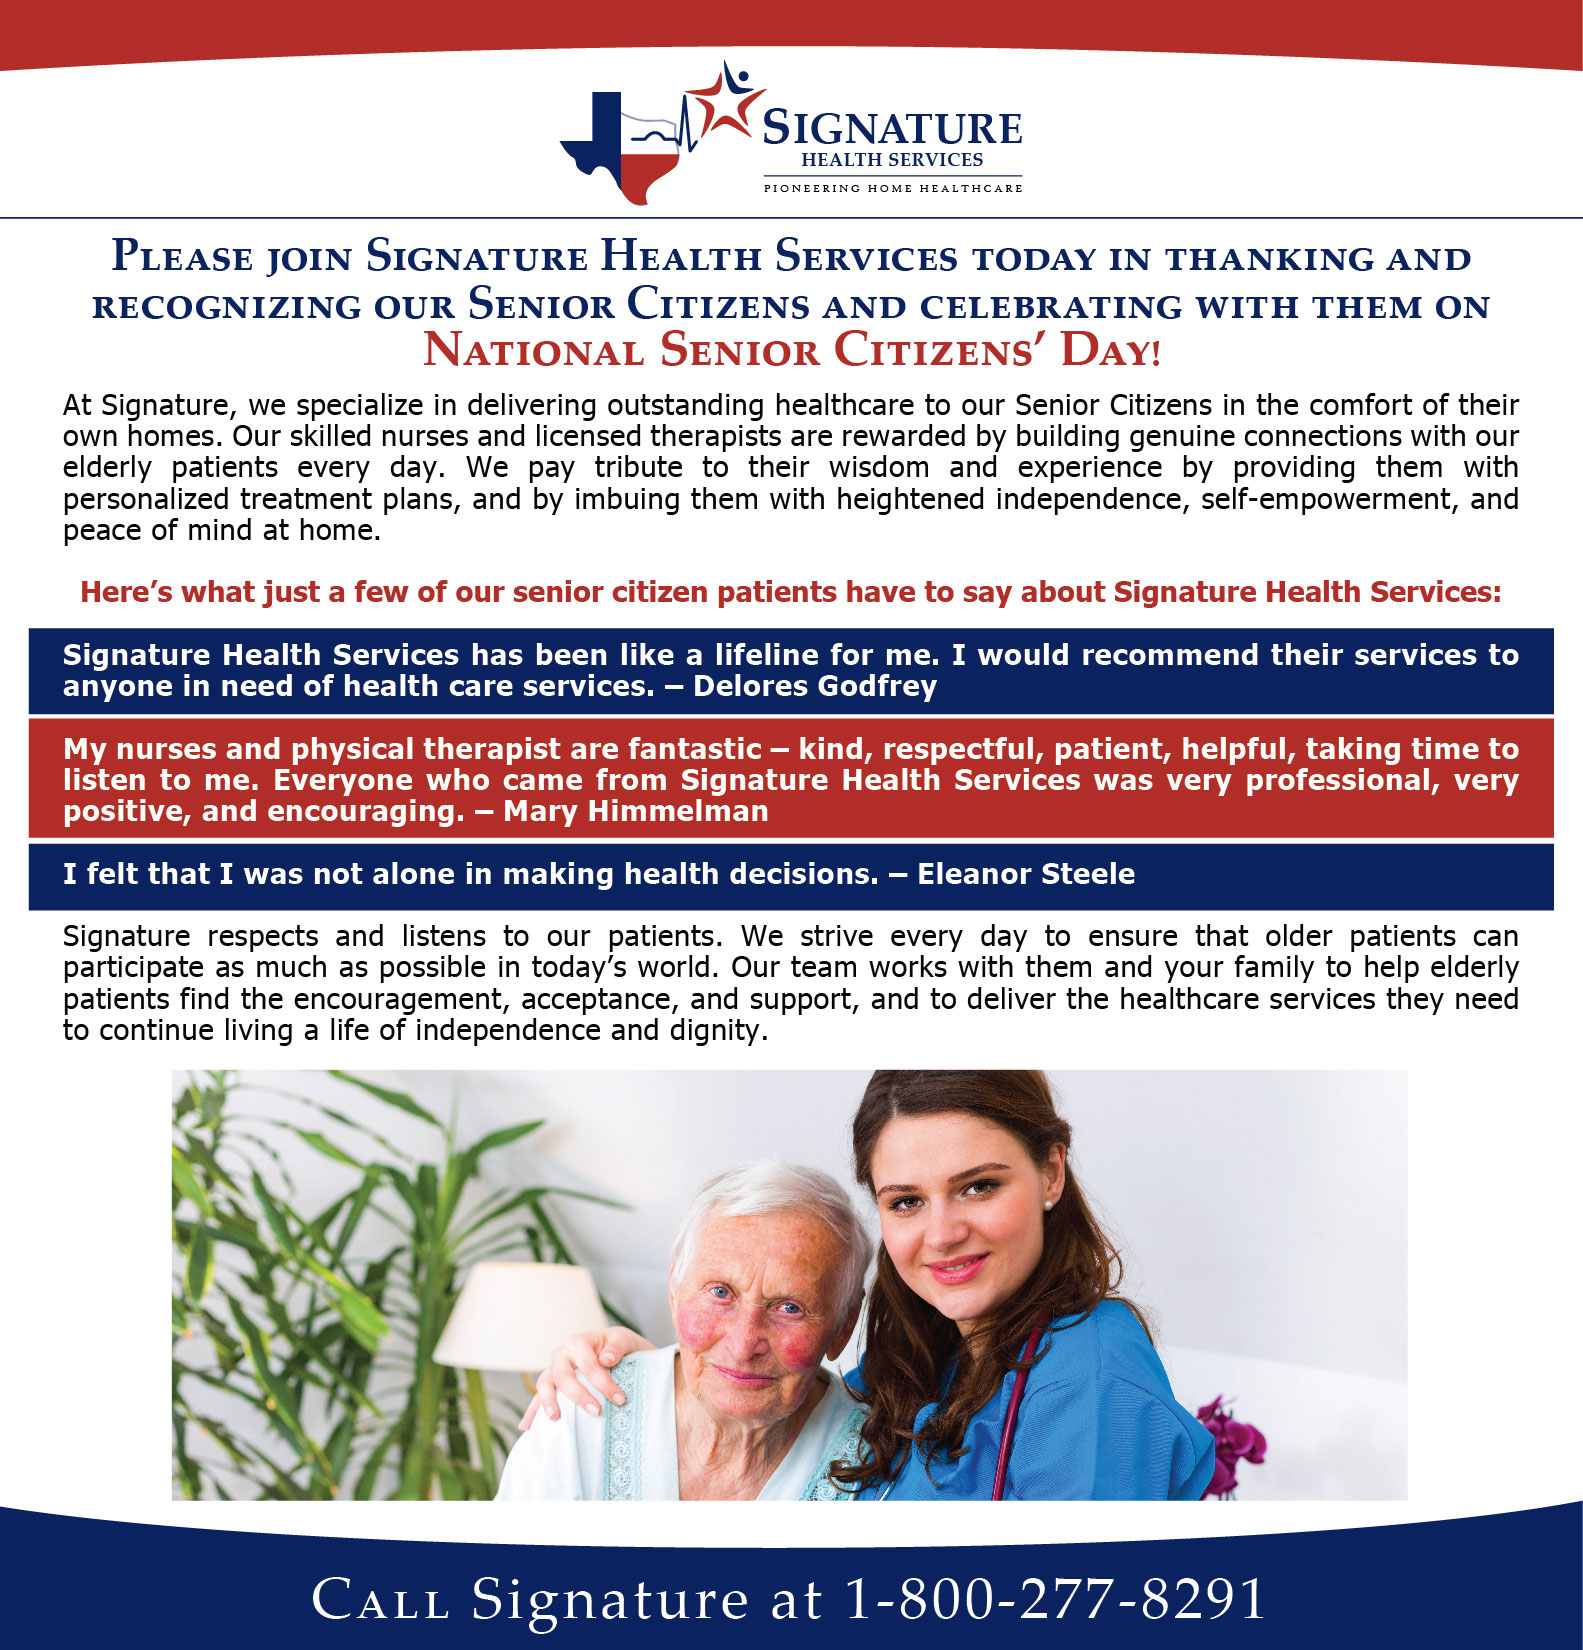 National Senior Citizens' Day - Signature Health Services